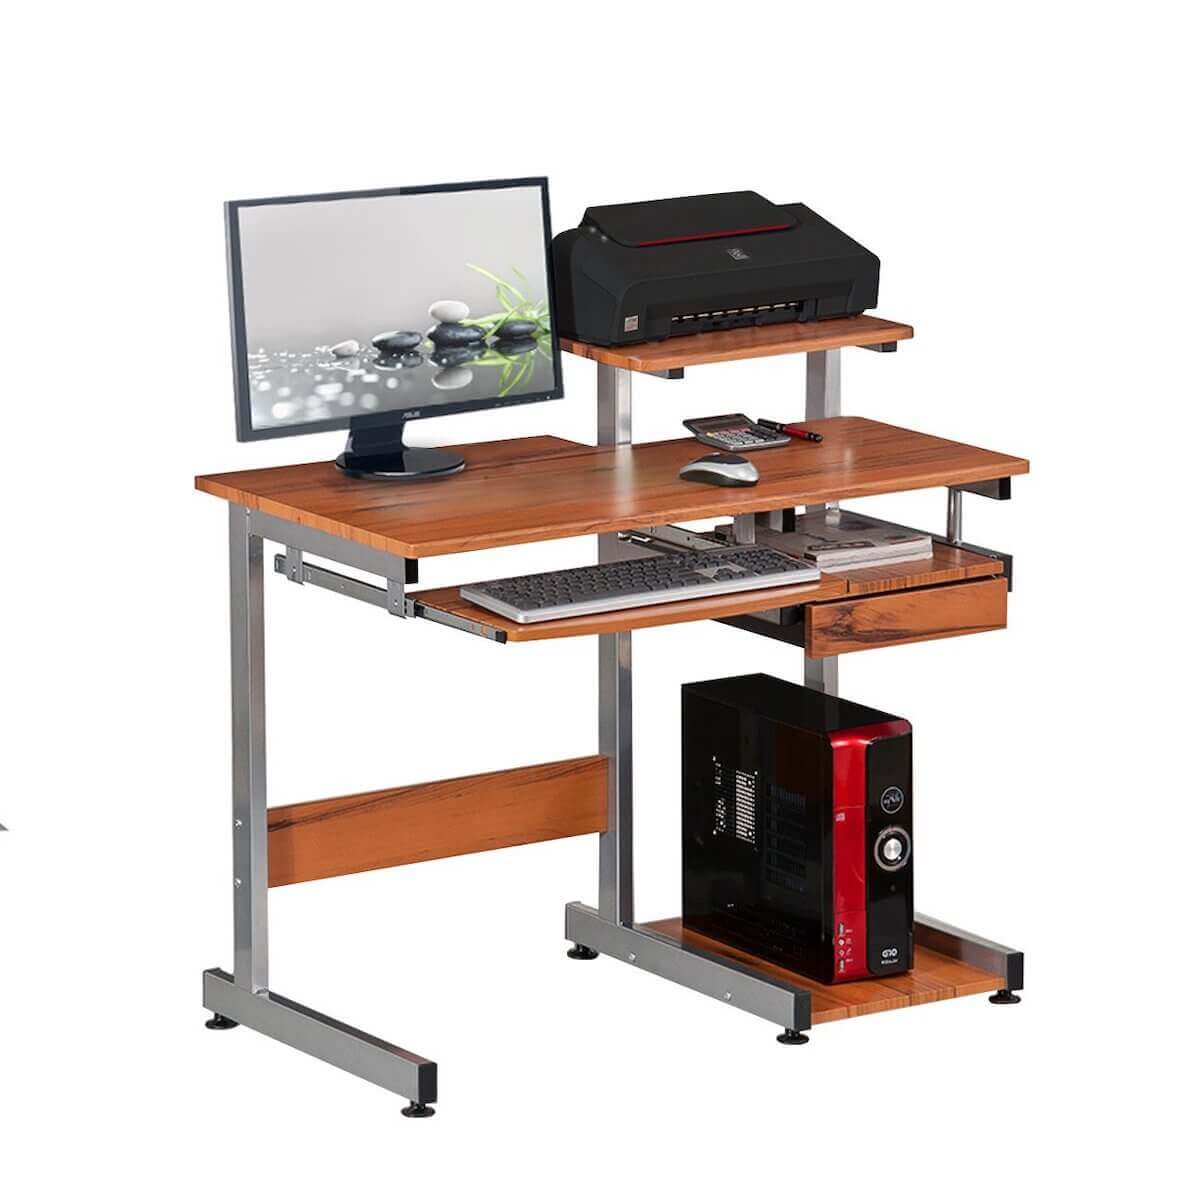 Techni Mobili Wood Grain Complete Computer Workstation Desk RTA-2706A-WG01 with Laptop #color_wood grain